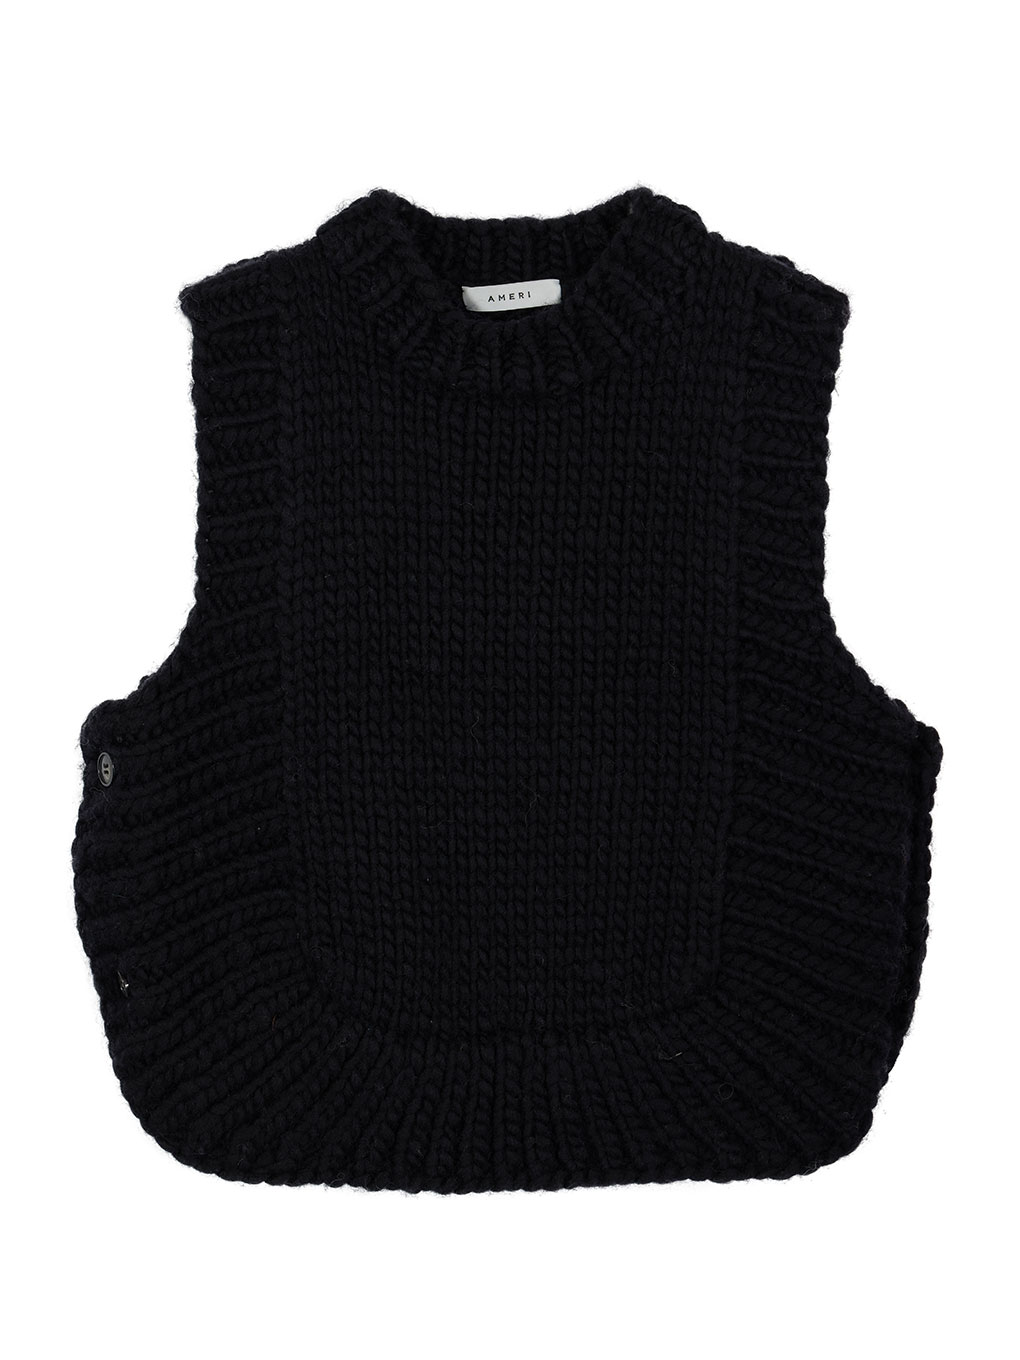 AMERI knit vest